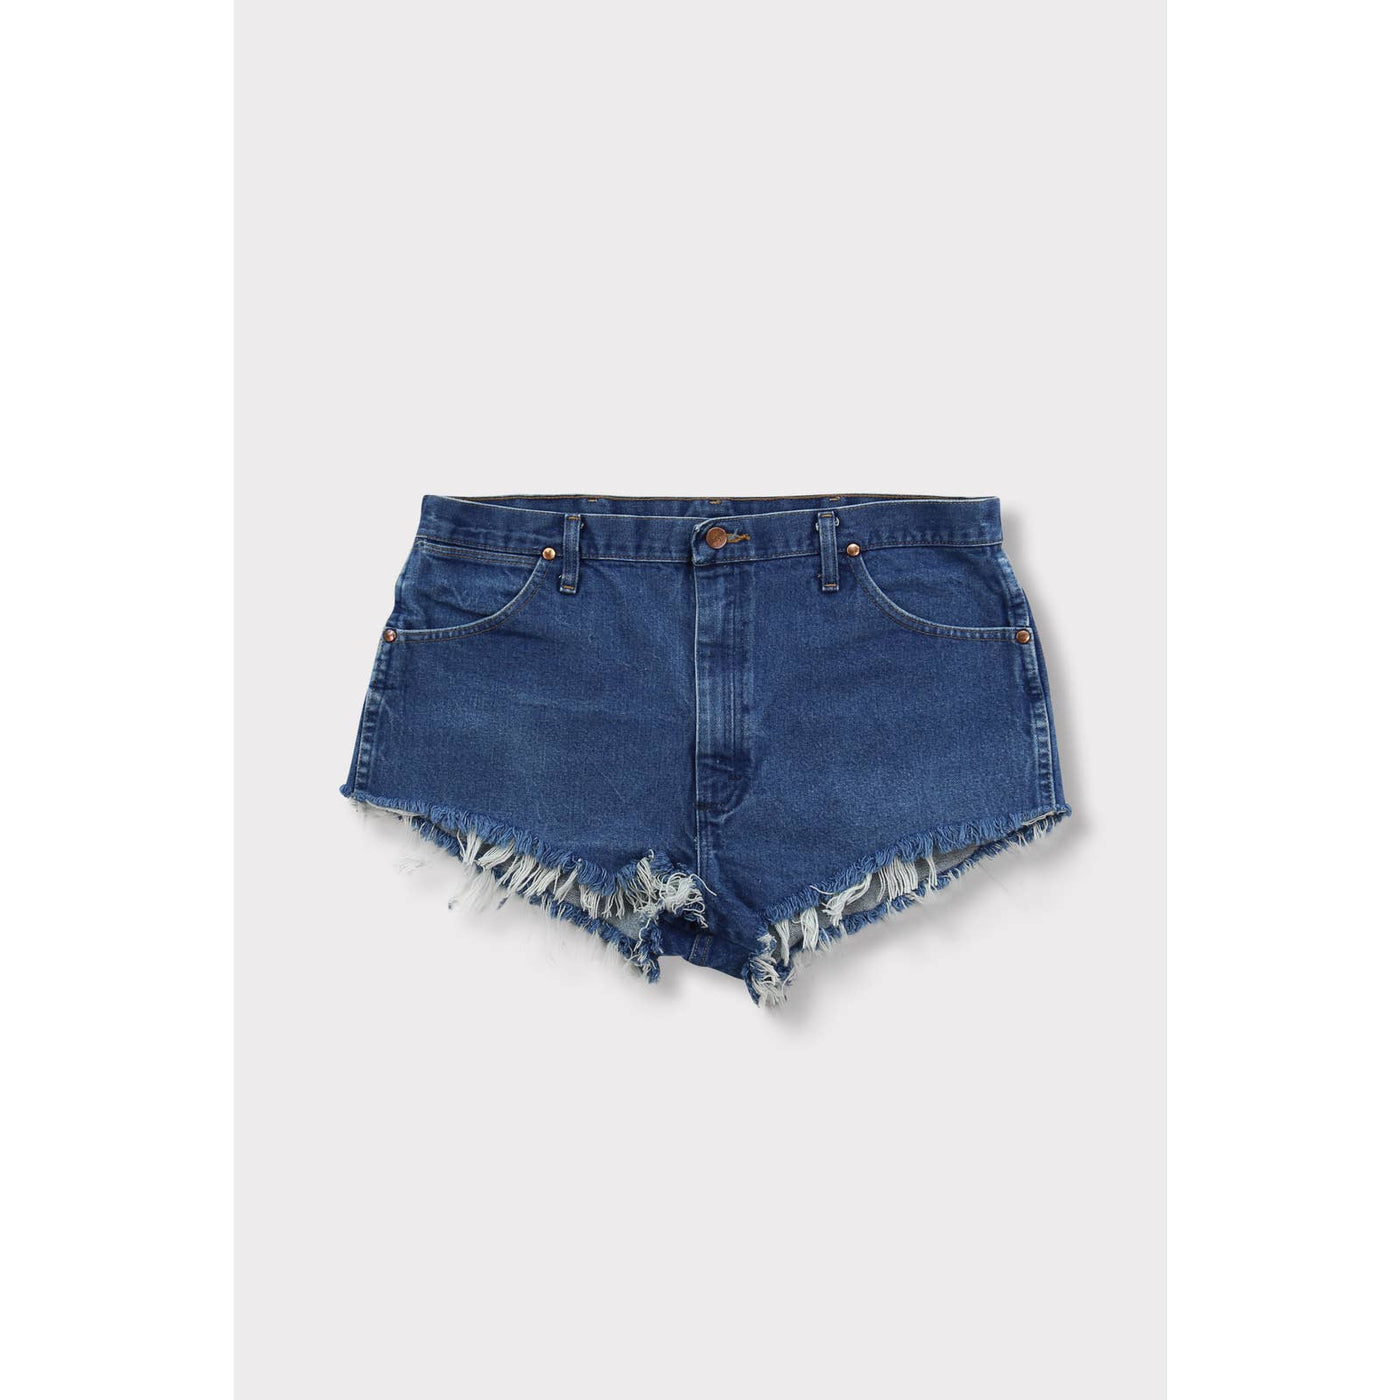 Vintage Wrangler Distressed Dark Wash Shorts